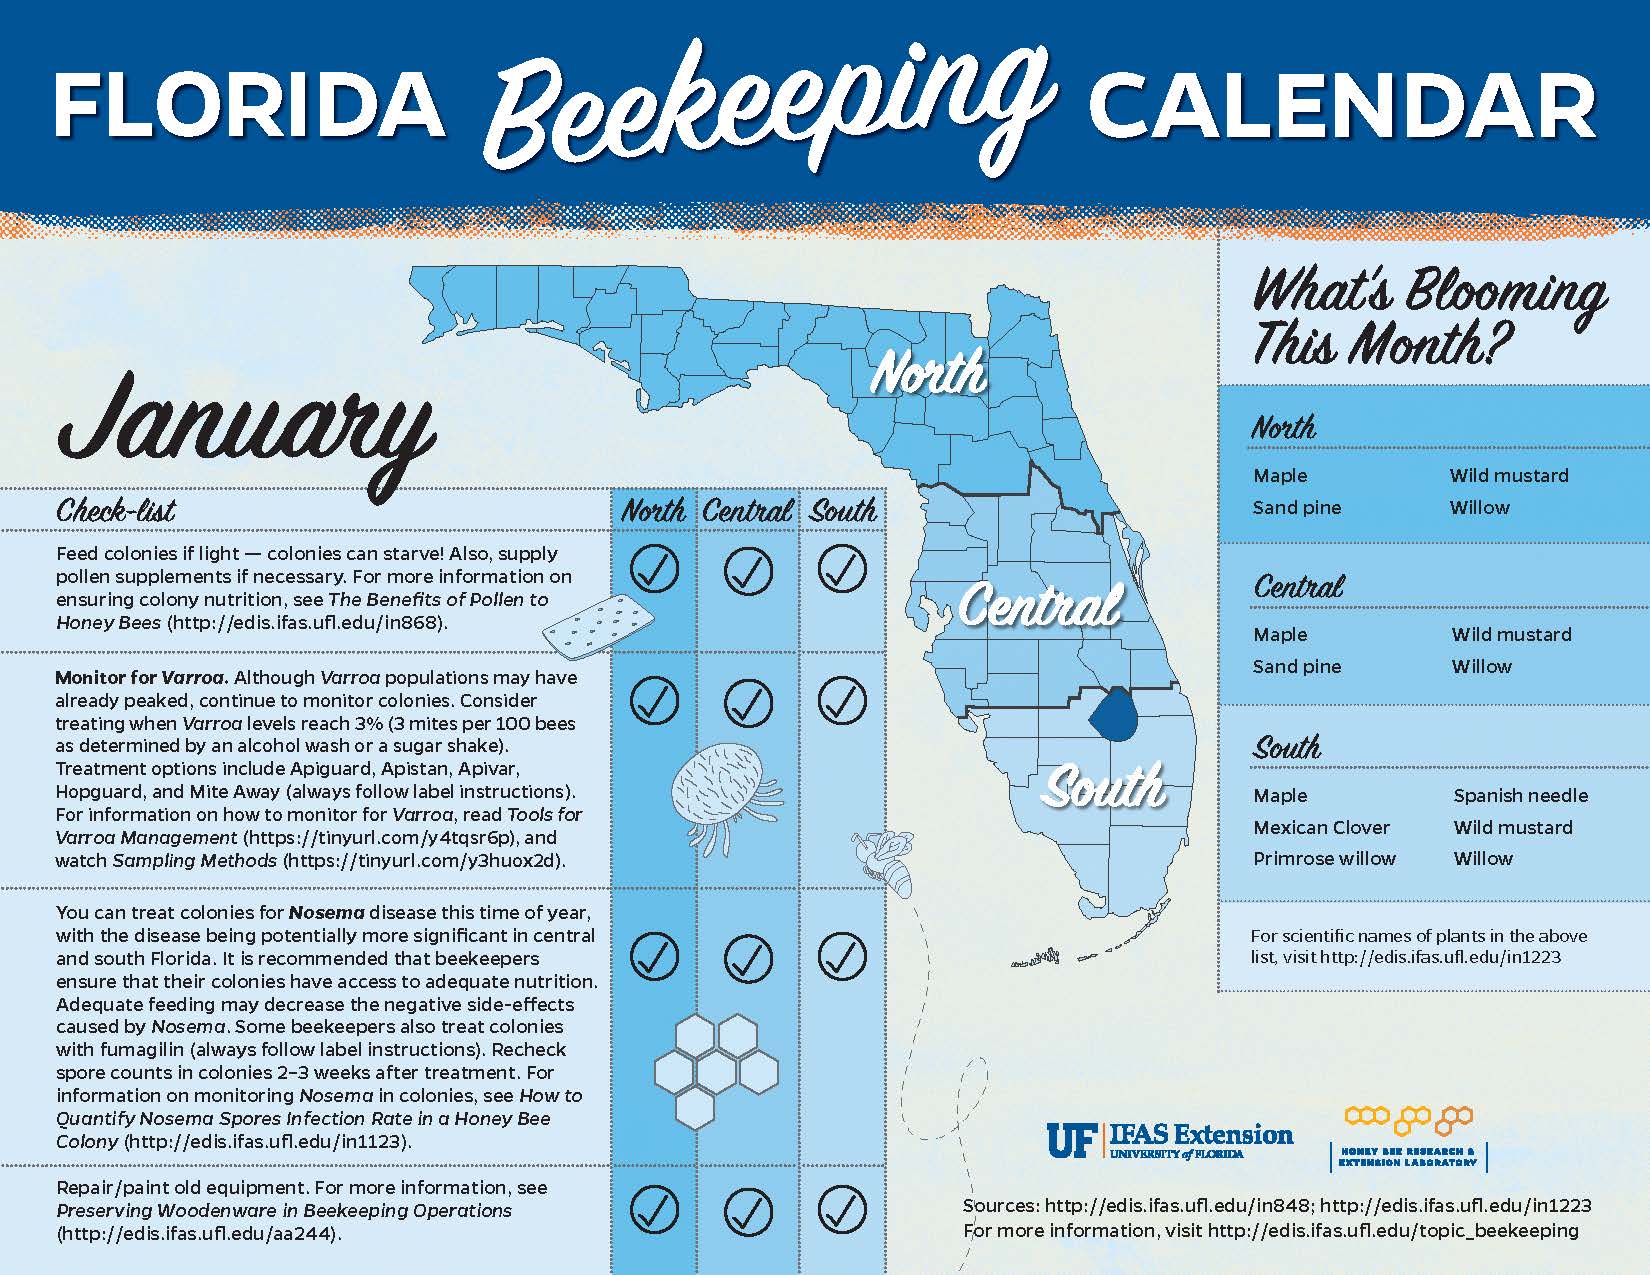 Florida Beekeeping Management Calendar January 2021 Uf Ifas Entomology And Nematology Department